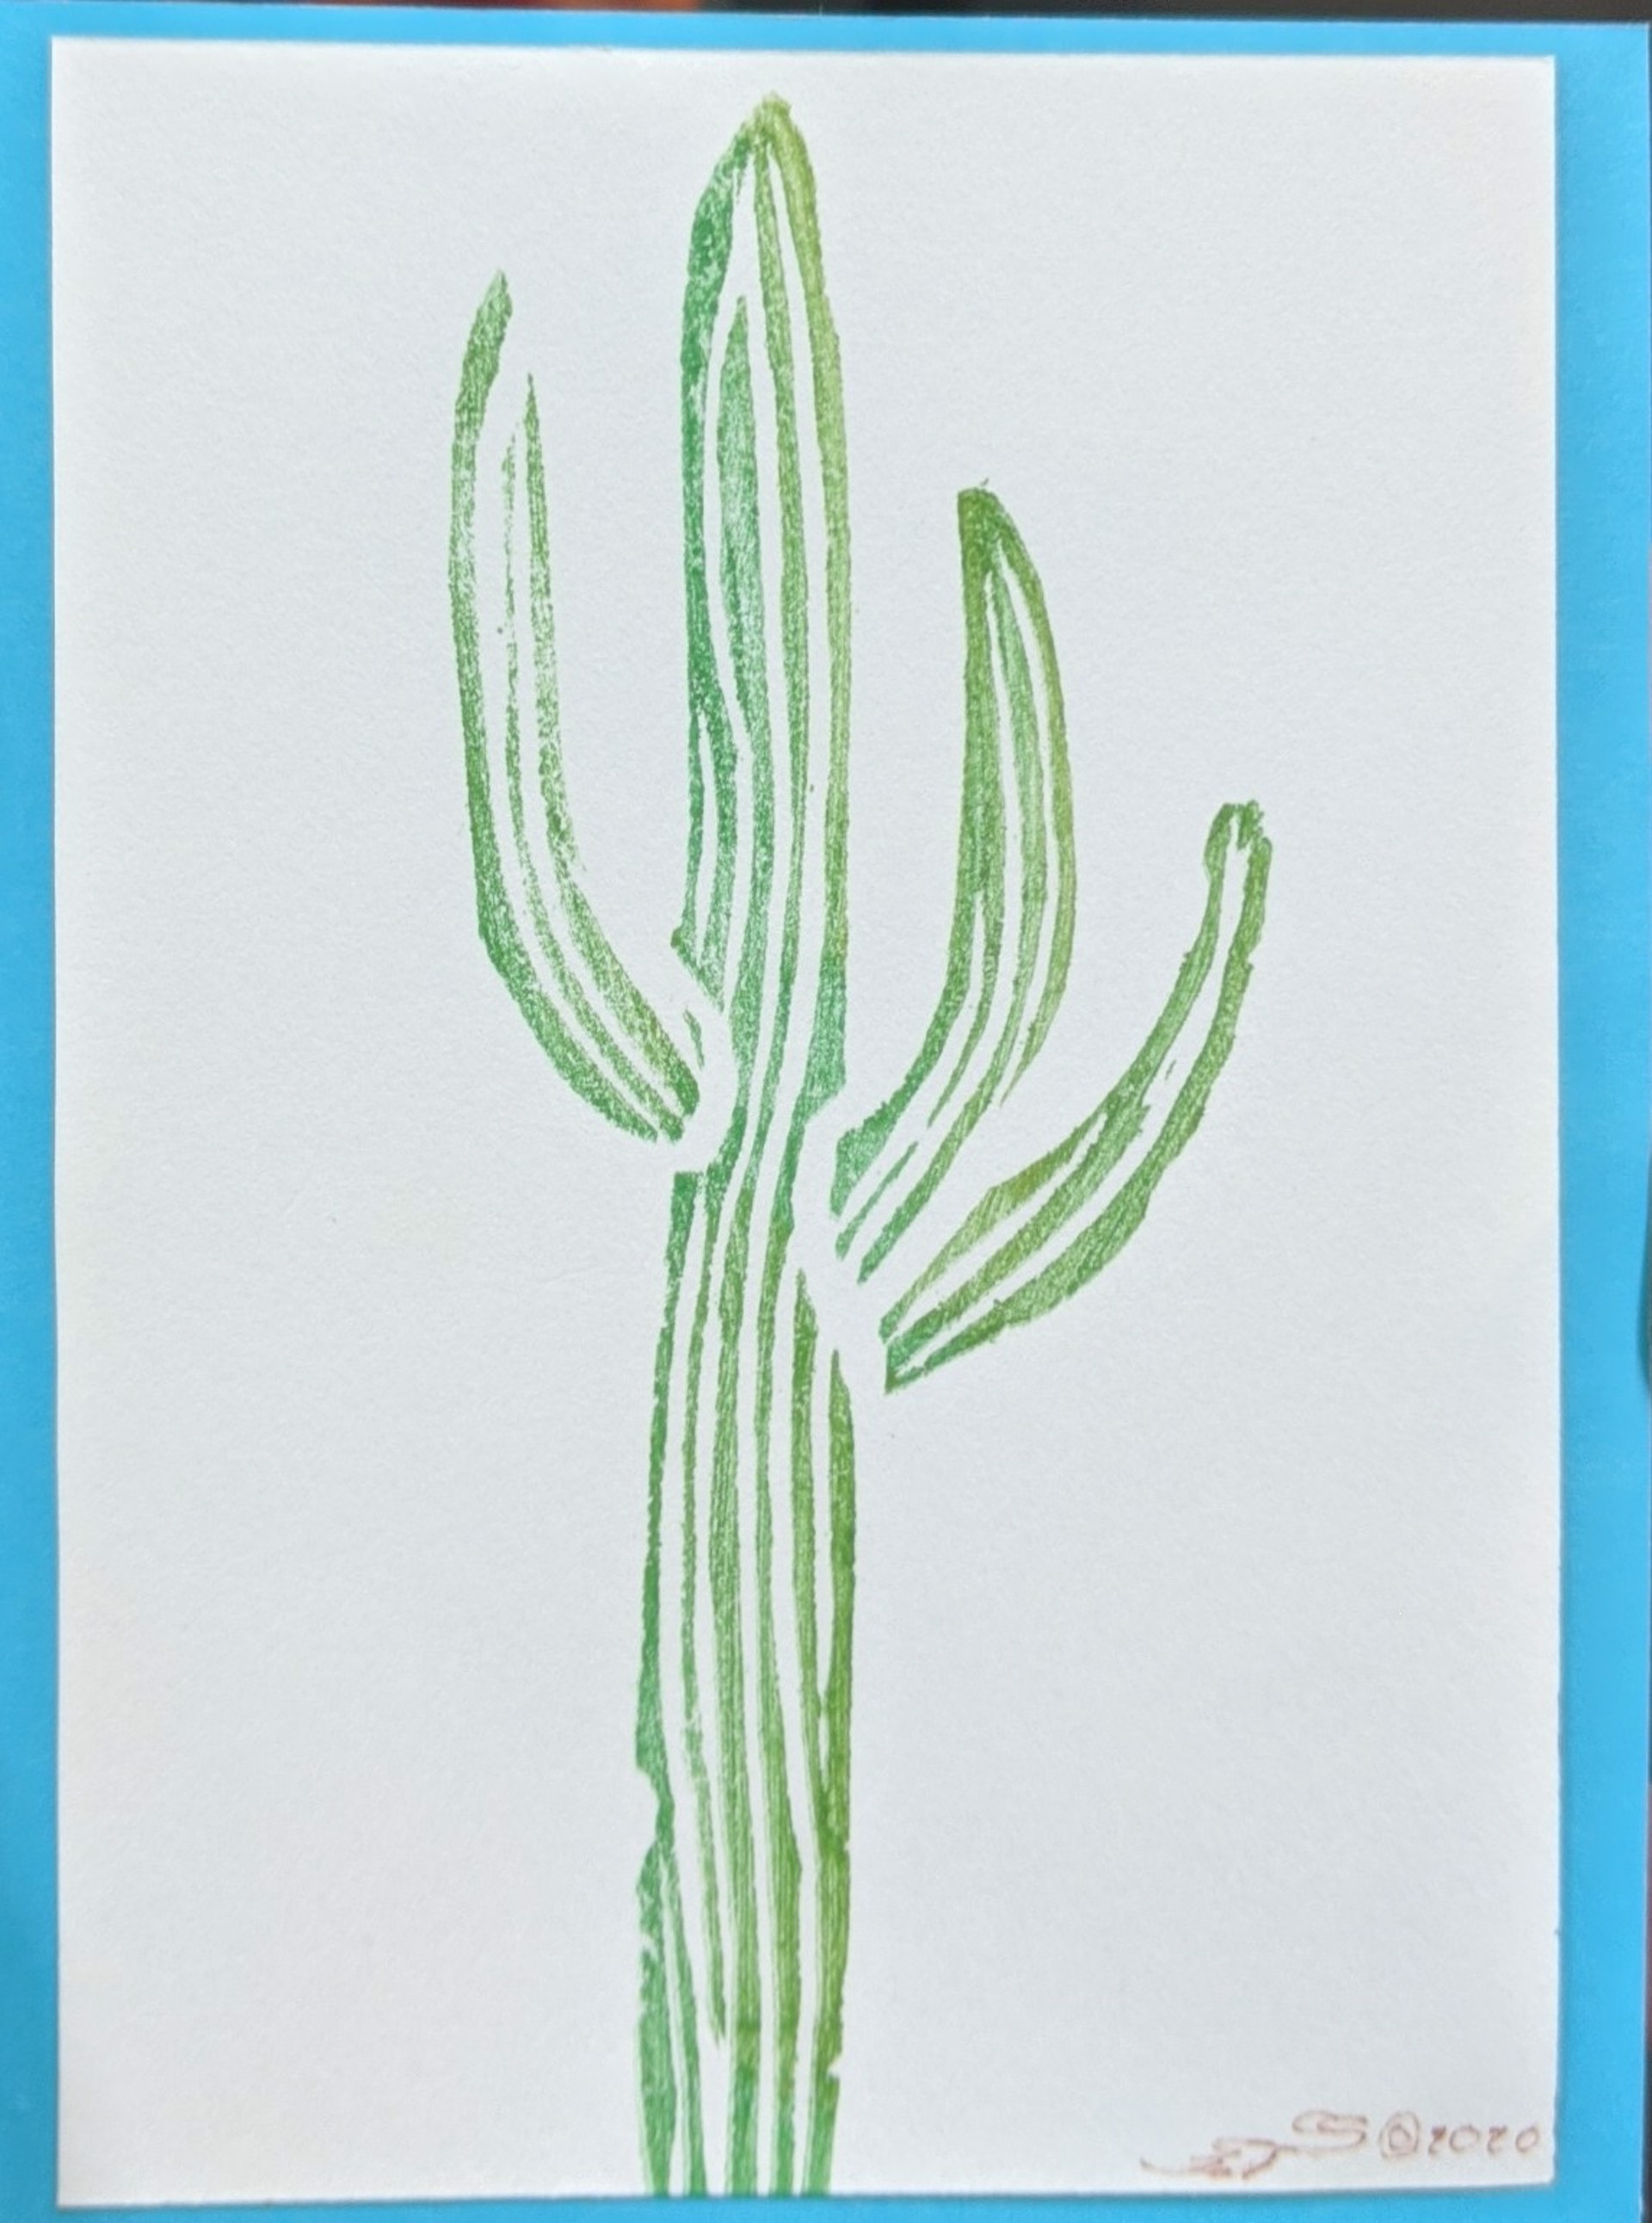 Saguaro Cactus - card by Cynthia Sequanna